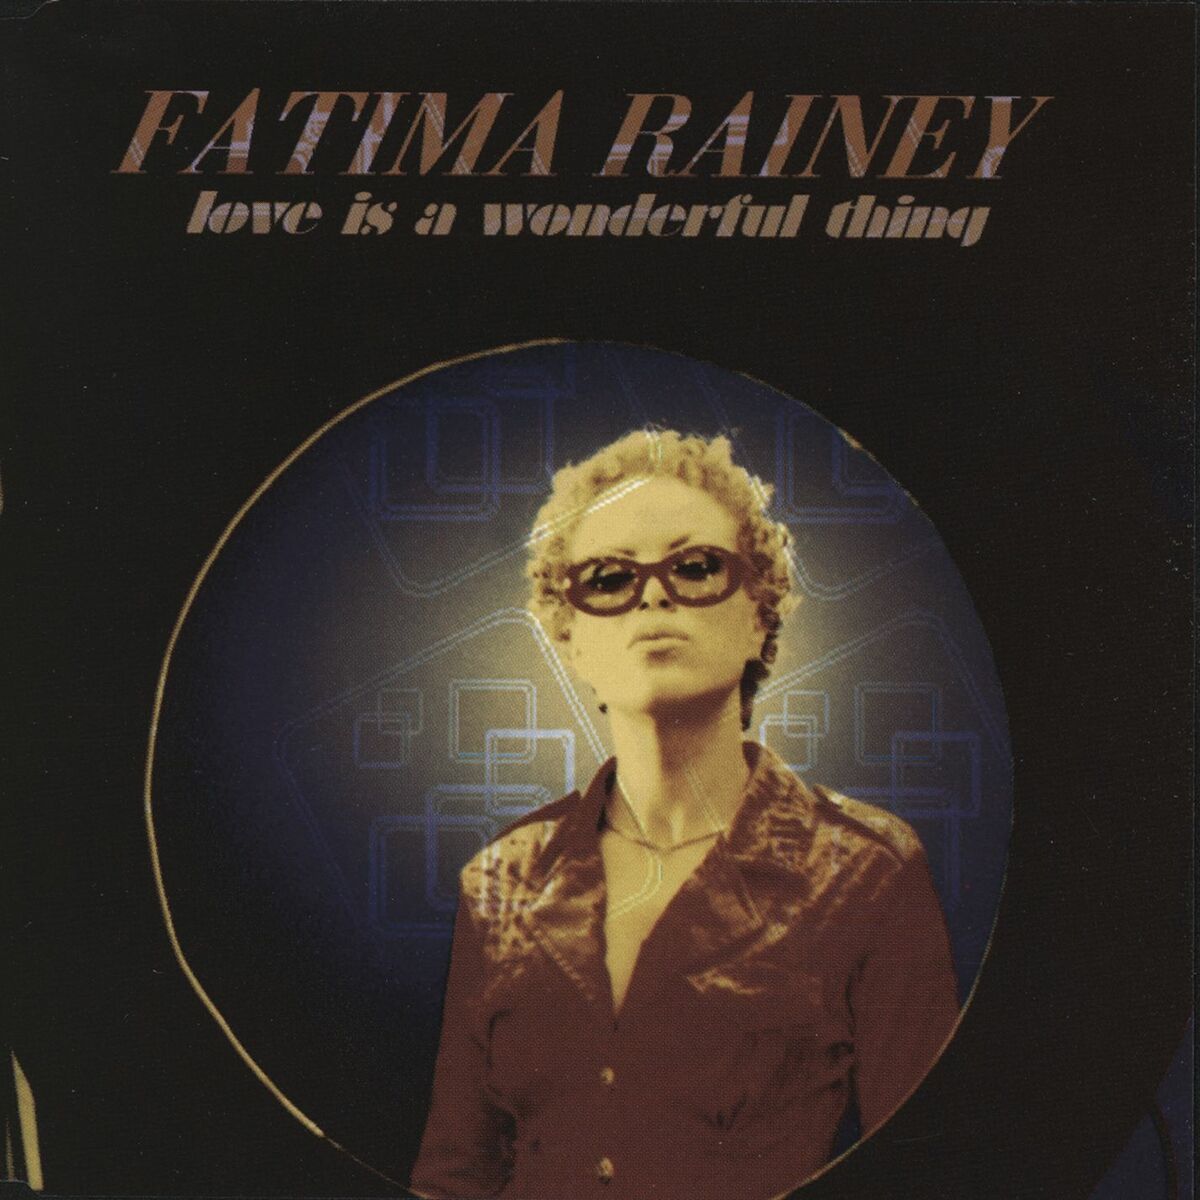 Fatima Rainey - I Gave You The Best: lyrics and songs | Deezer